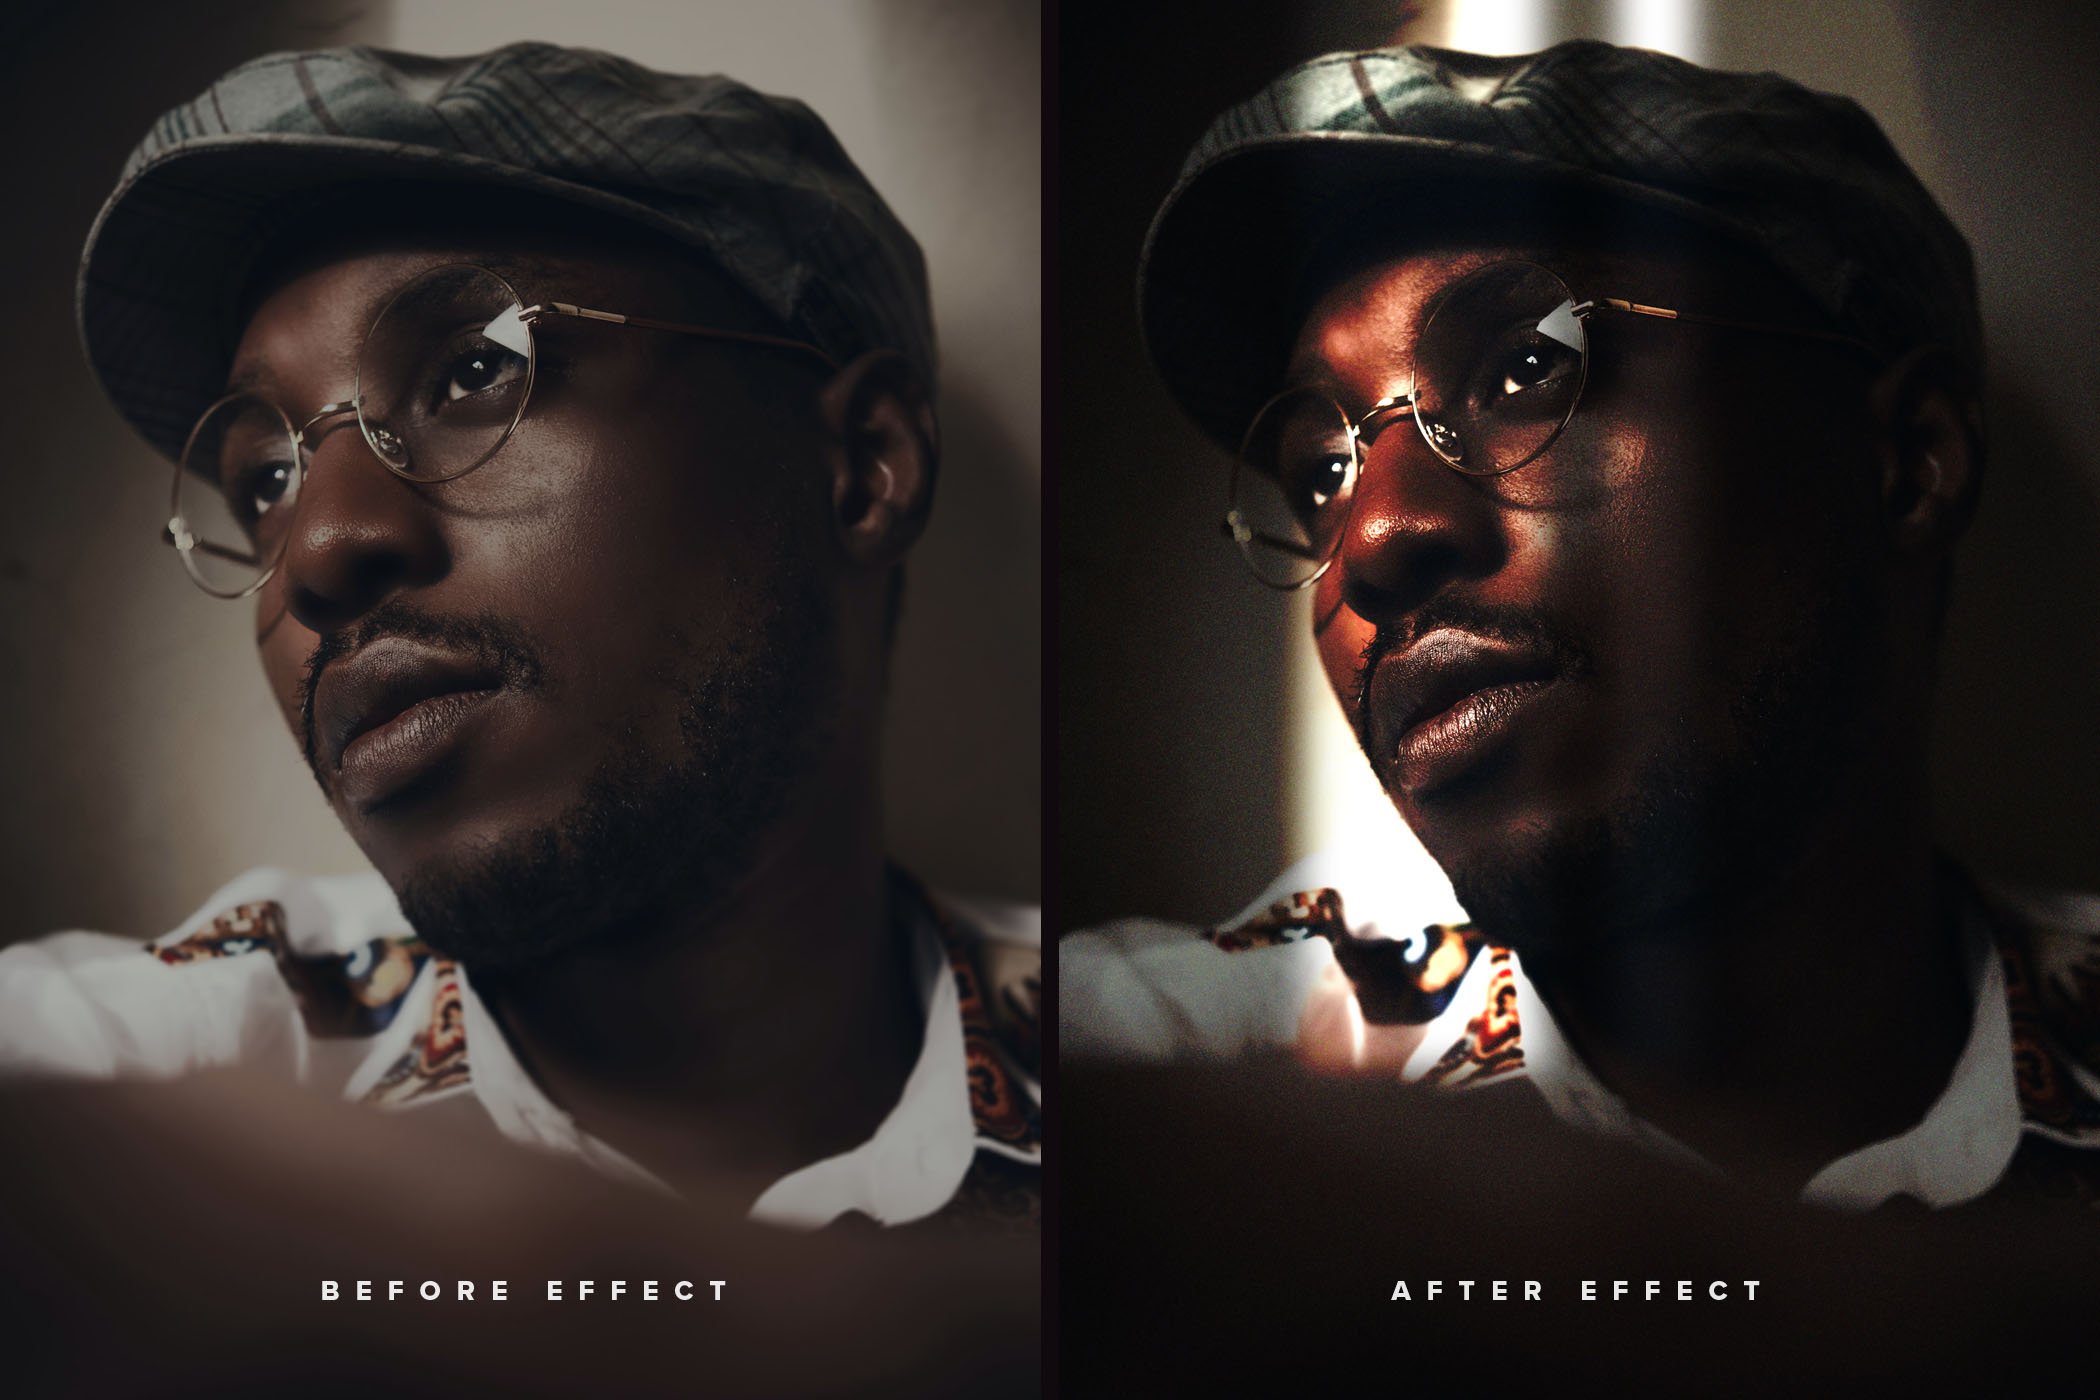 dramatic portrait sunlight overlay photo effect by creative veila studio 4 915